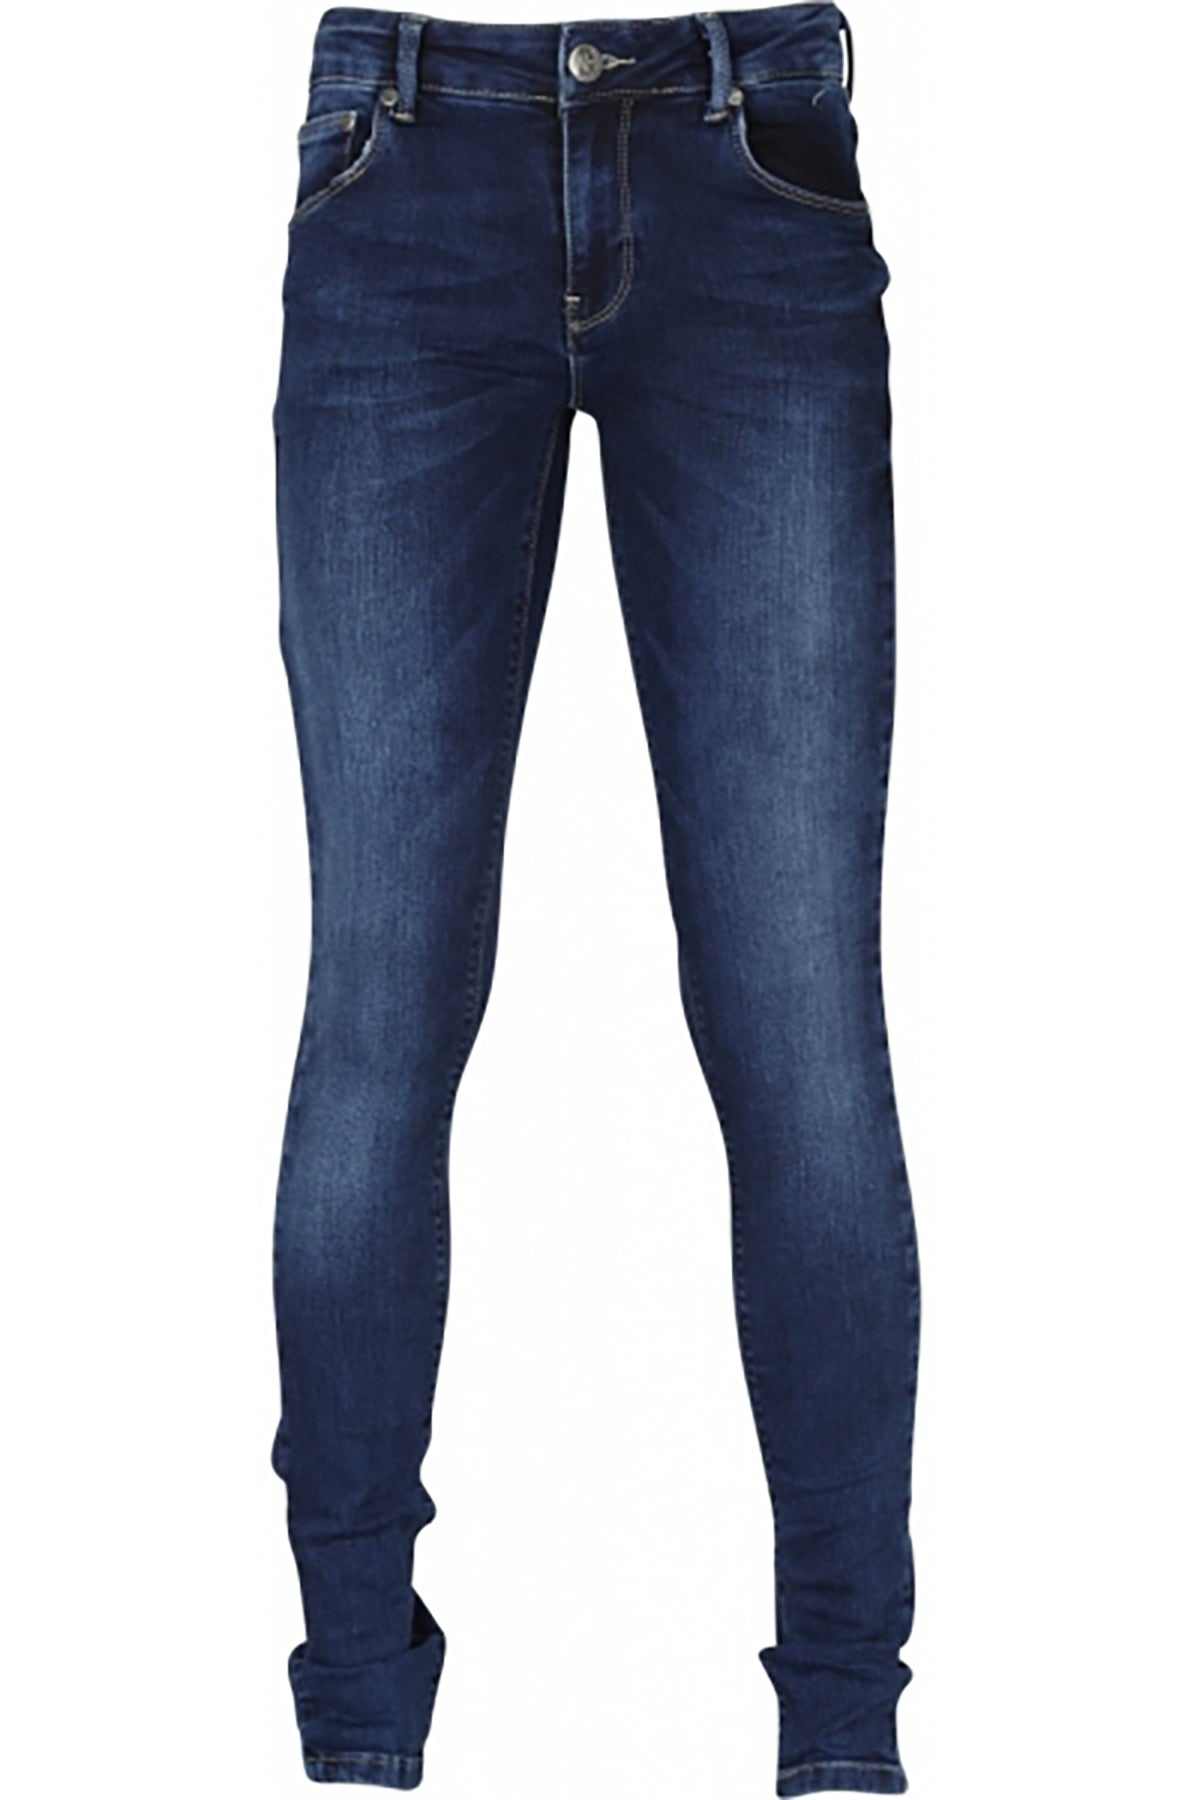 Cost:bart CBBowie Jeans Jeans 807 dark blue wash